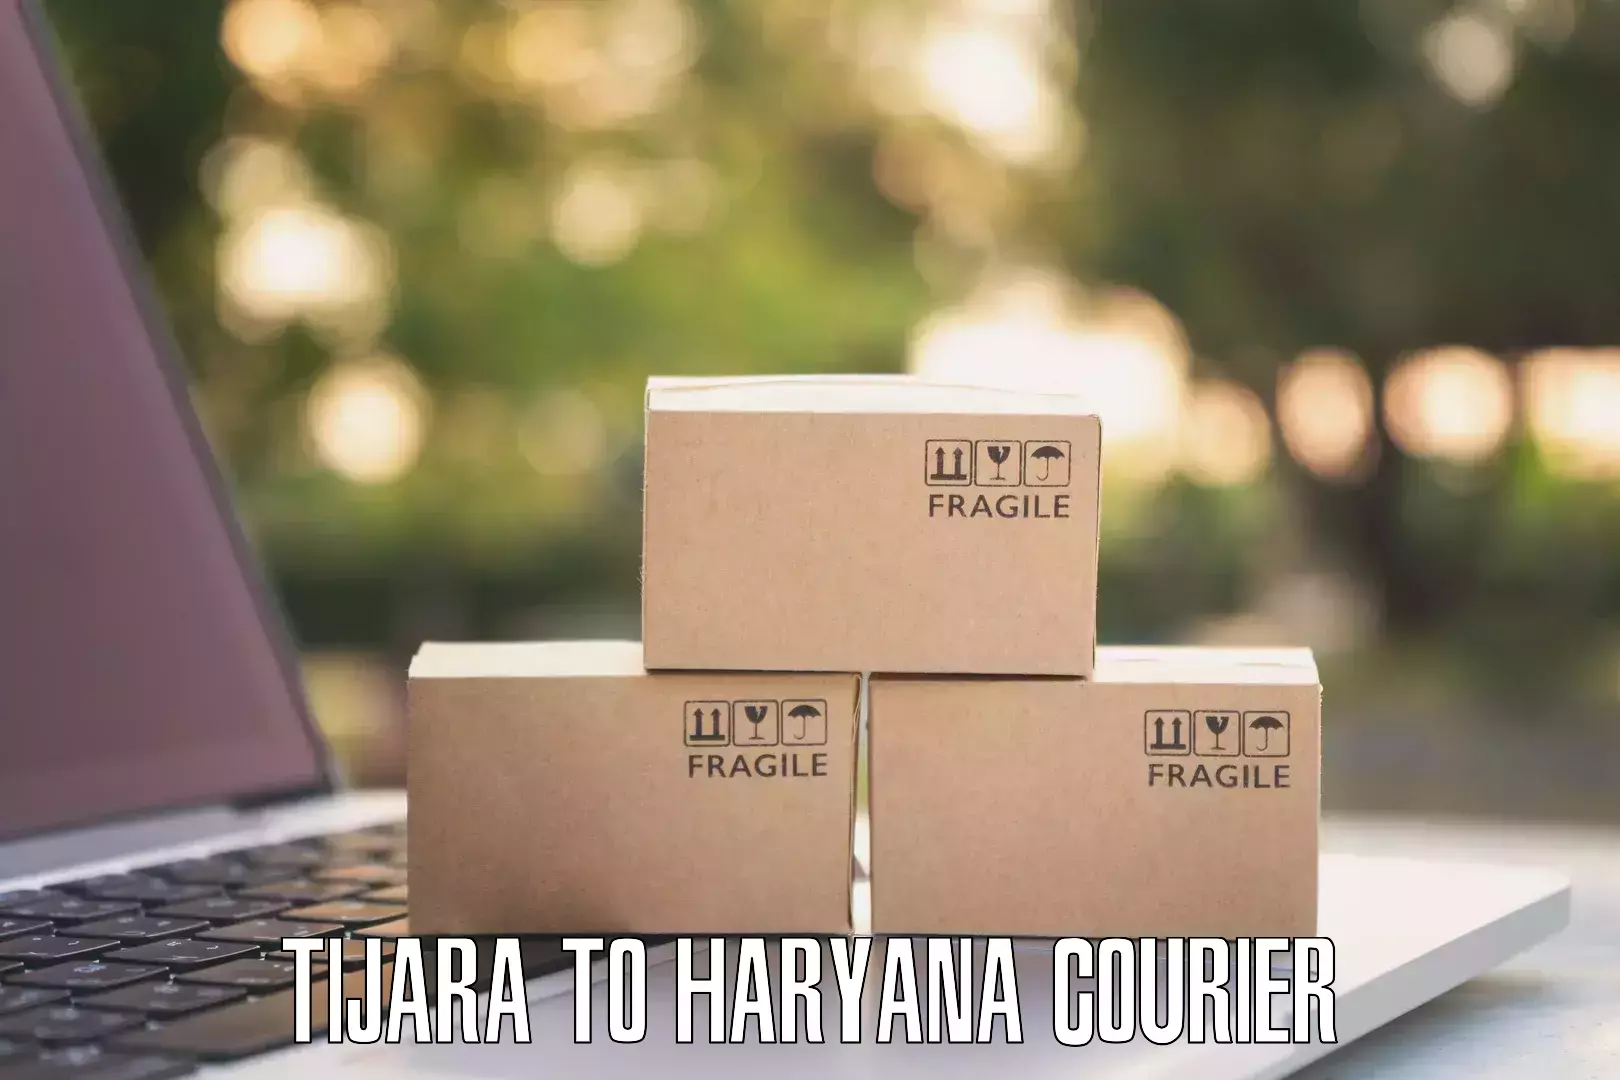 Online shipping calculator Tijara to Haryana